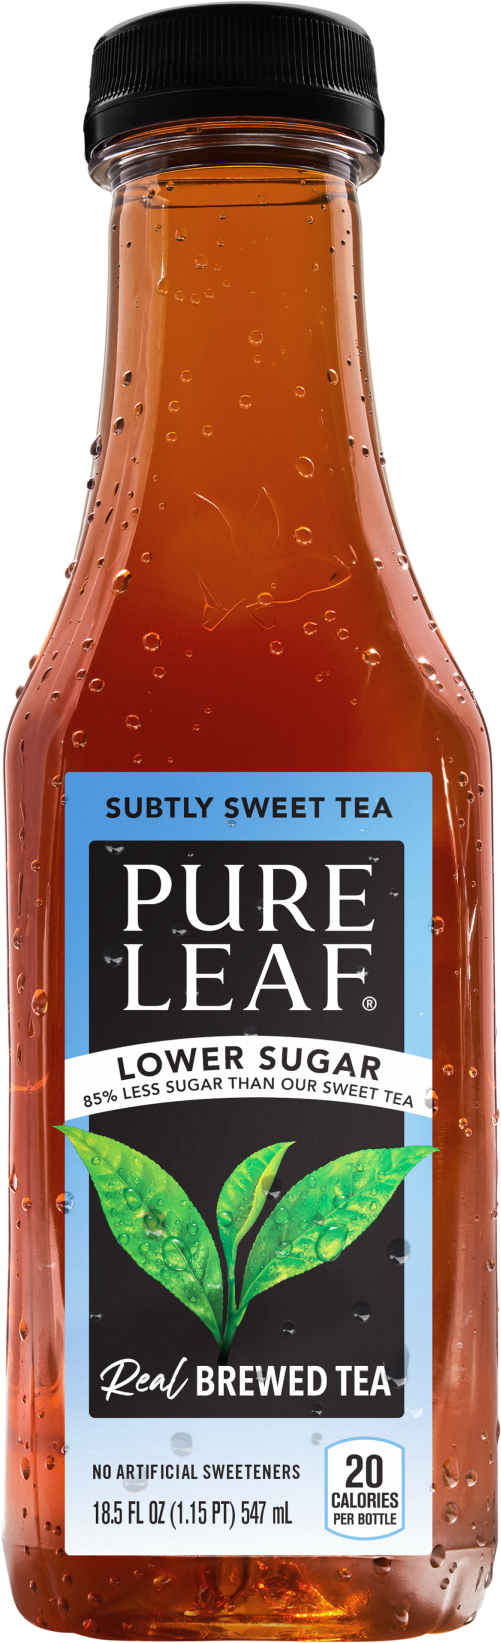 PURE LEAF LOW SUGAR REAL BREWED ICED TEA :: BEVERAGE PRODUCT